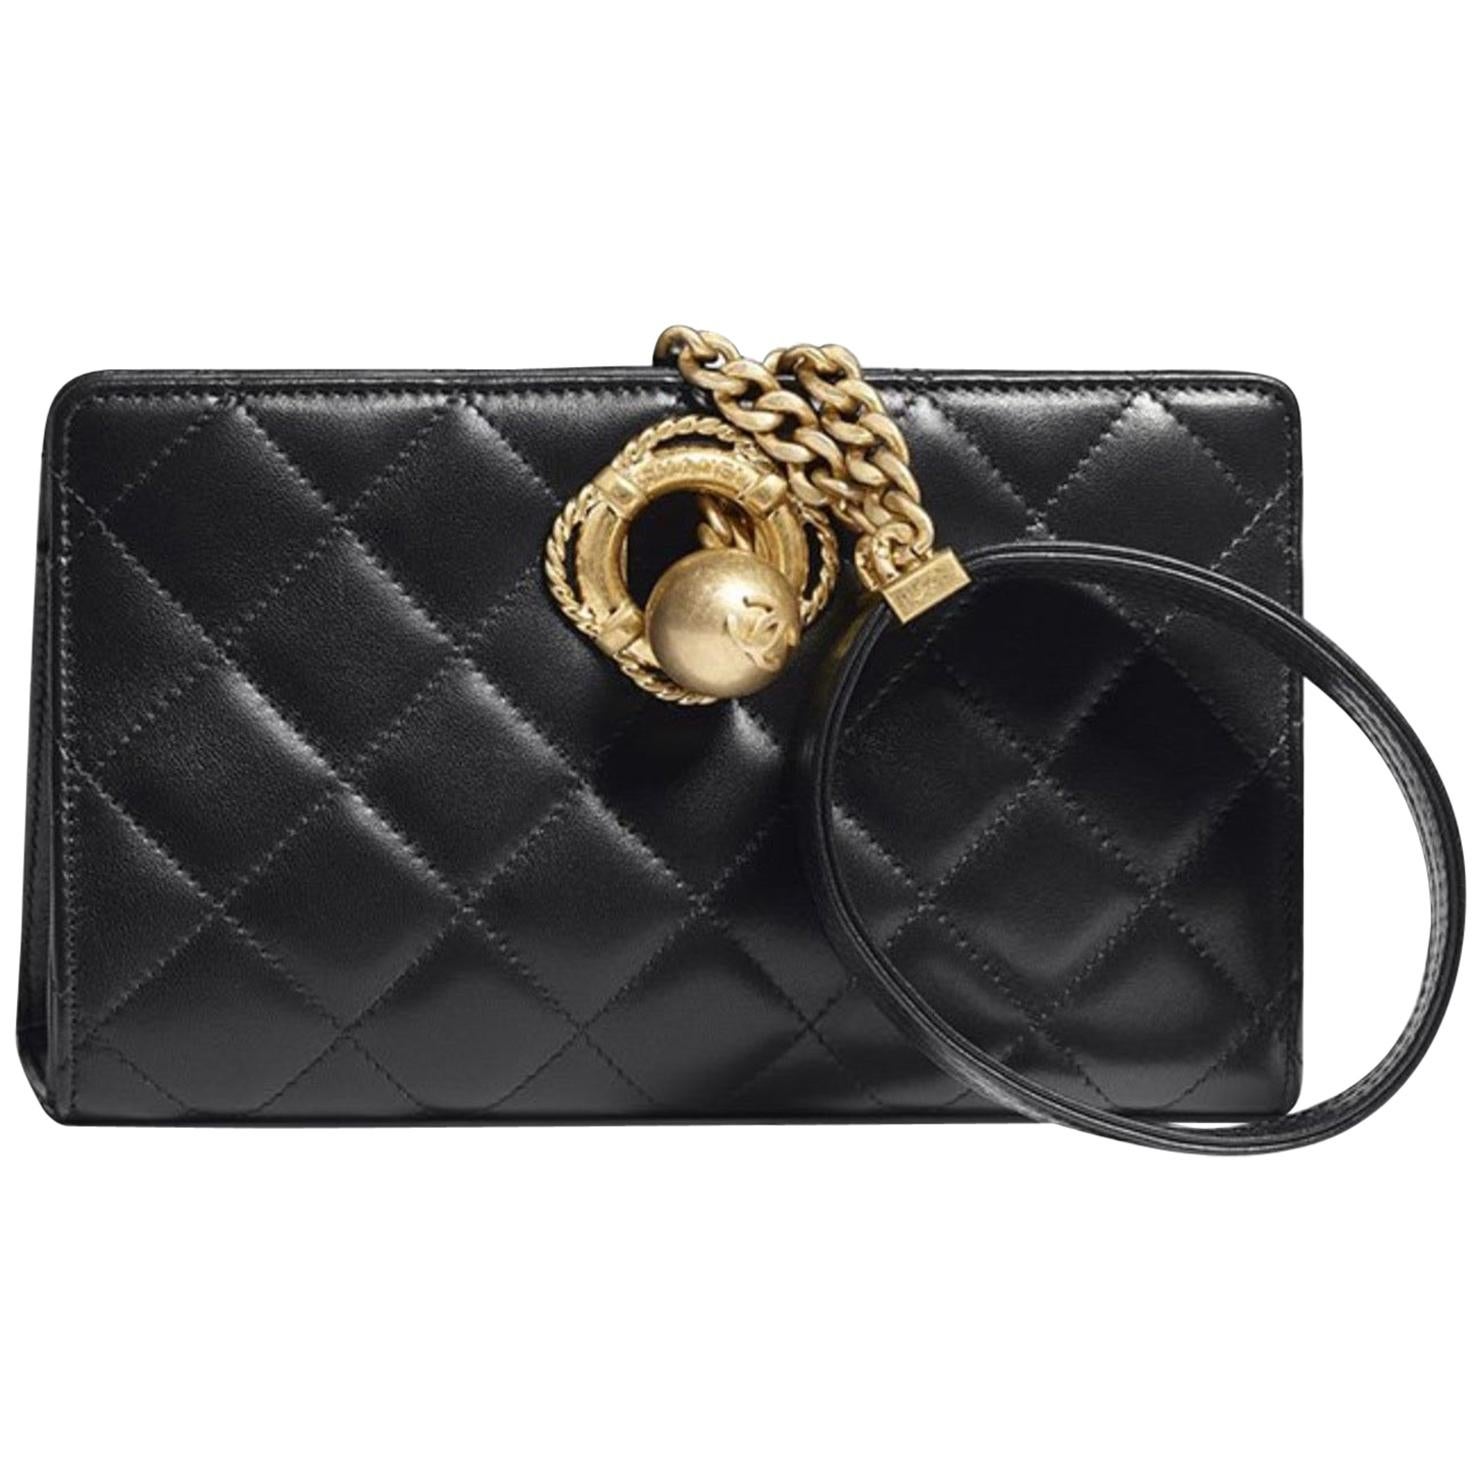 Chanel NEW Runway Black Gold Wristlet Clutch Top Handle Evening Shoulder Bag